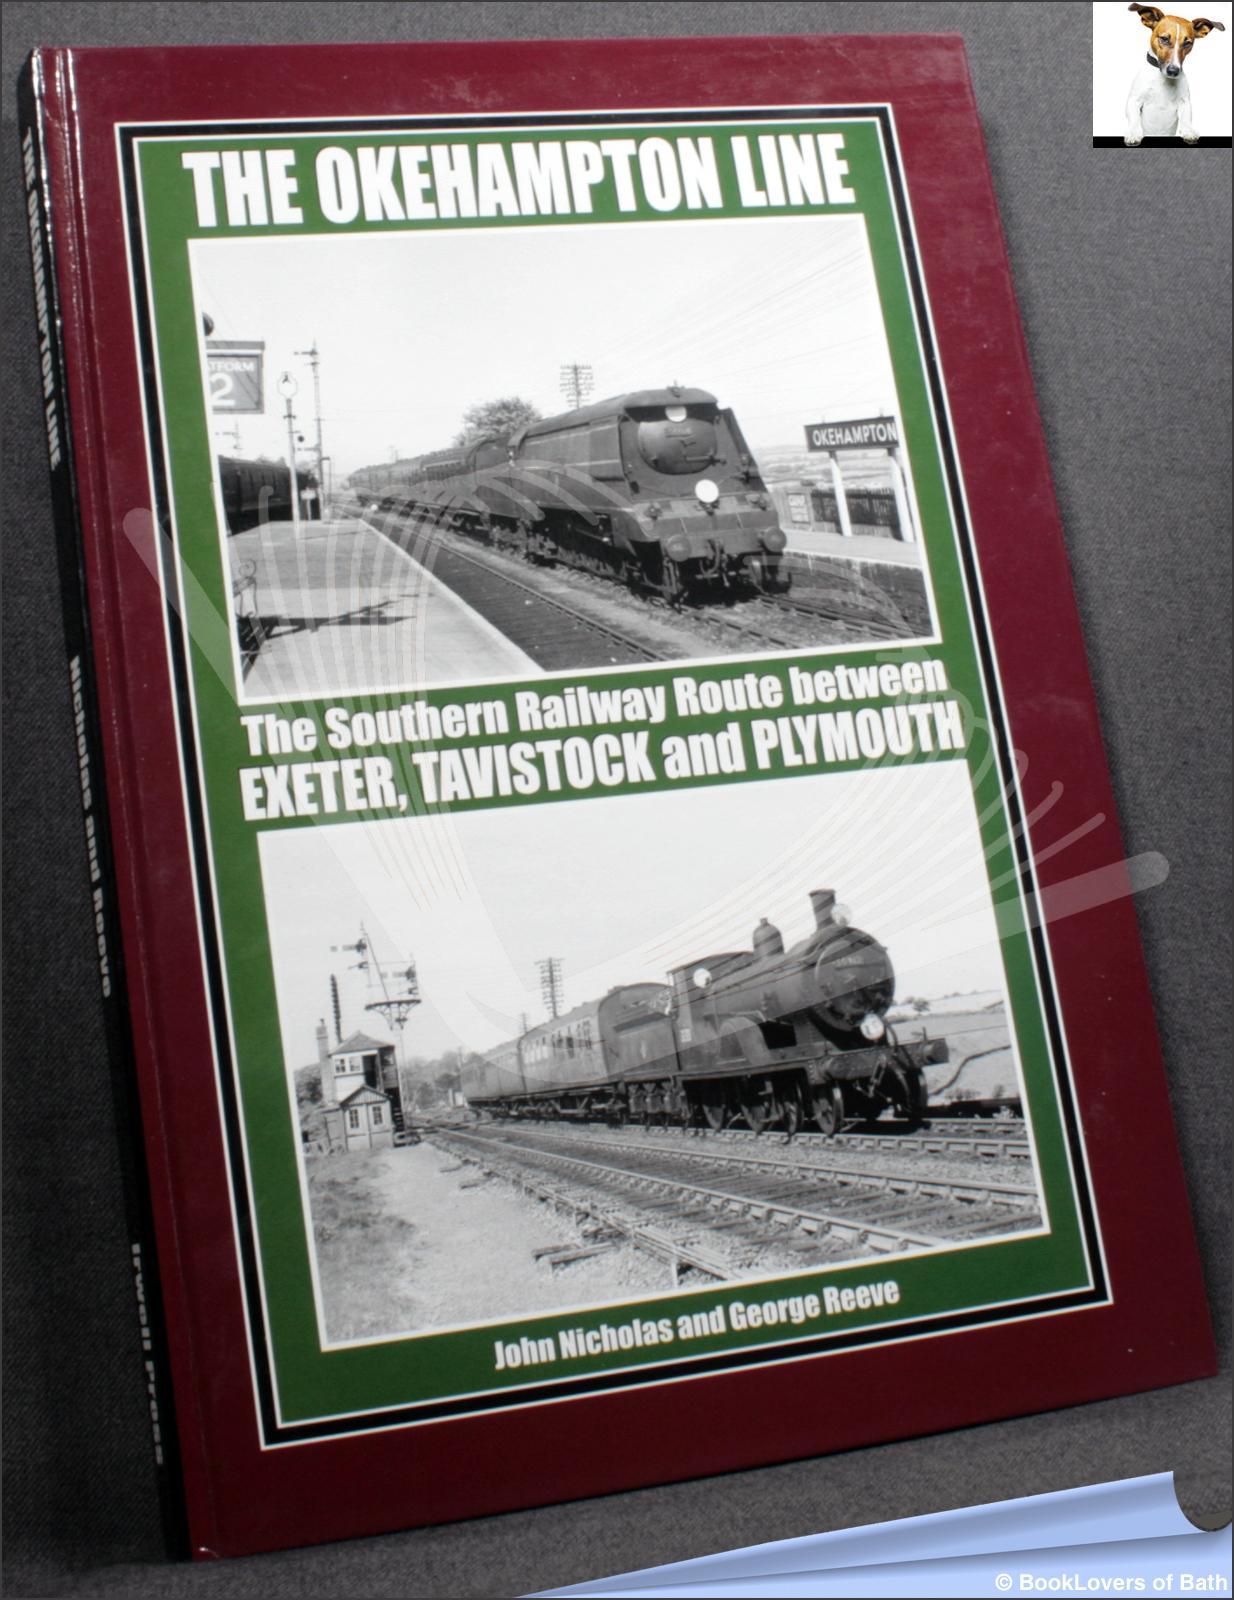 The Okehampton Line: The Southern Railway Route Between Exeter, Tavistock and Plymouth - John Nicholas & George Reeve